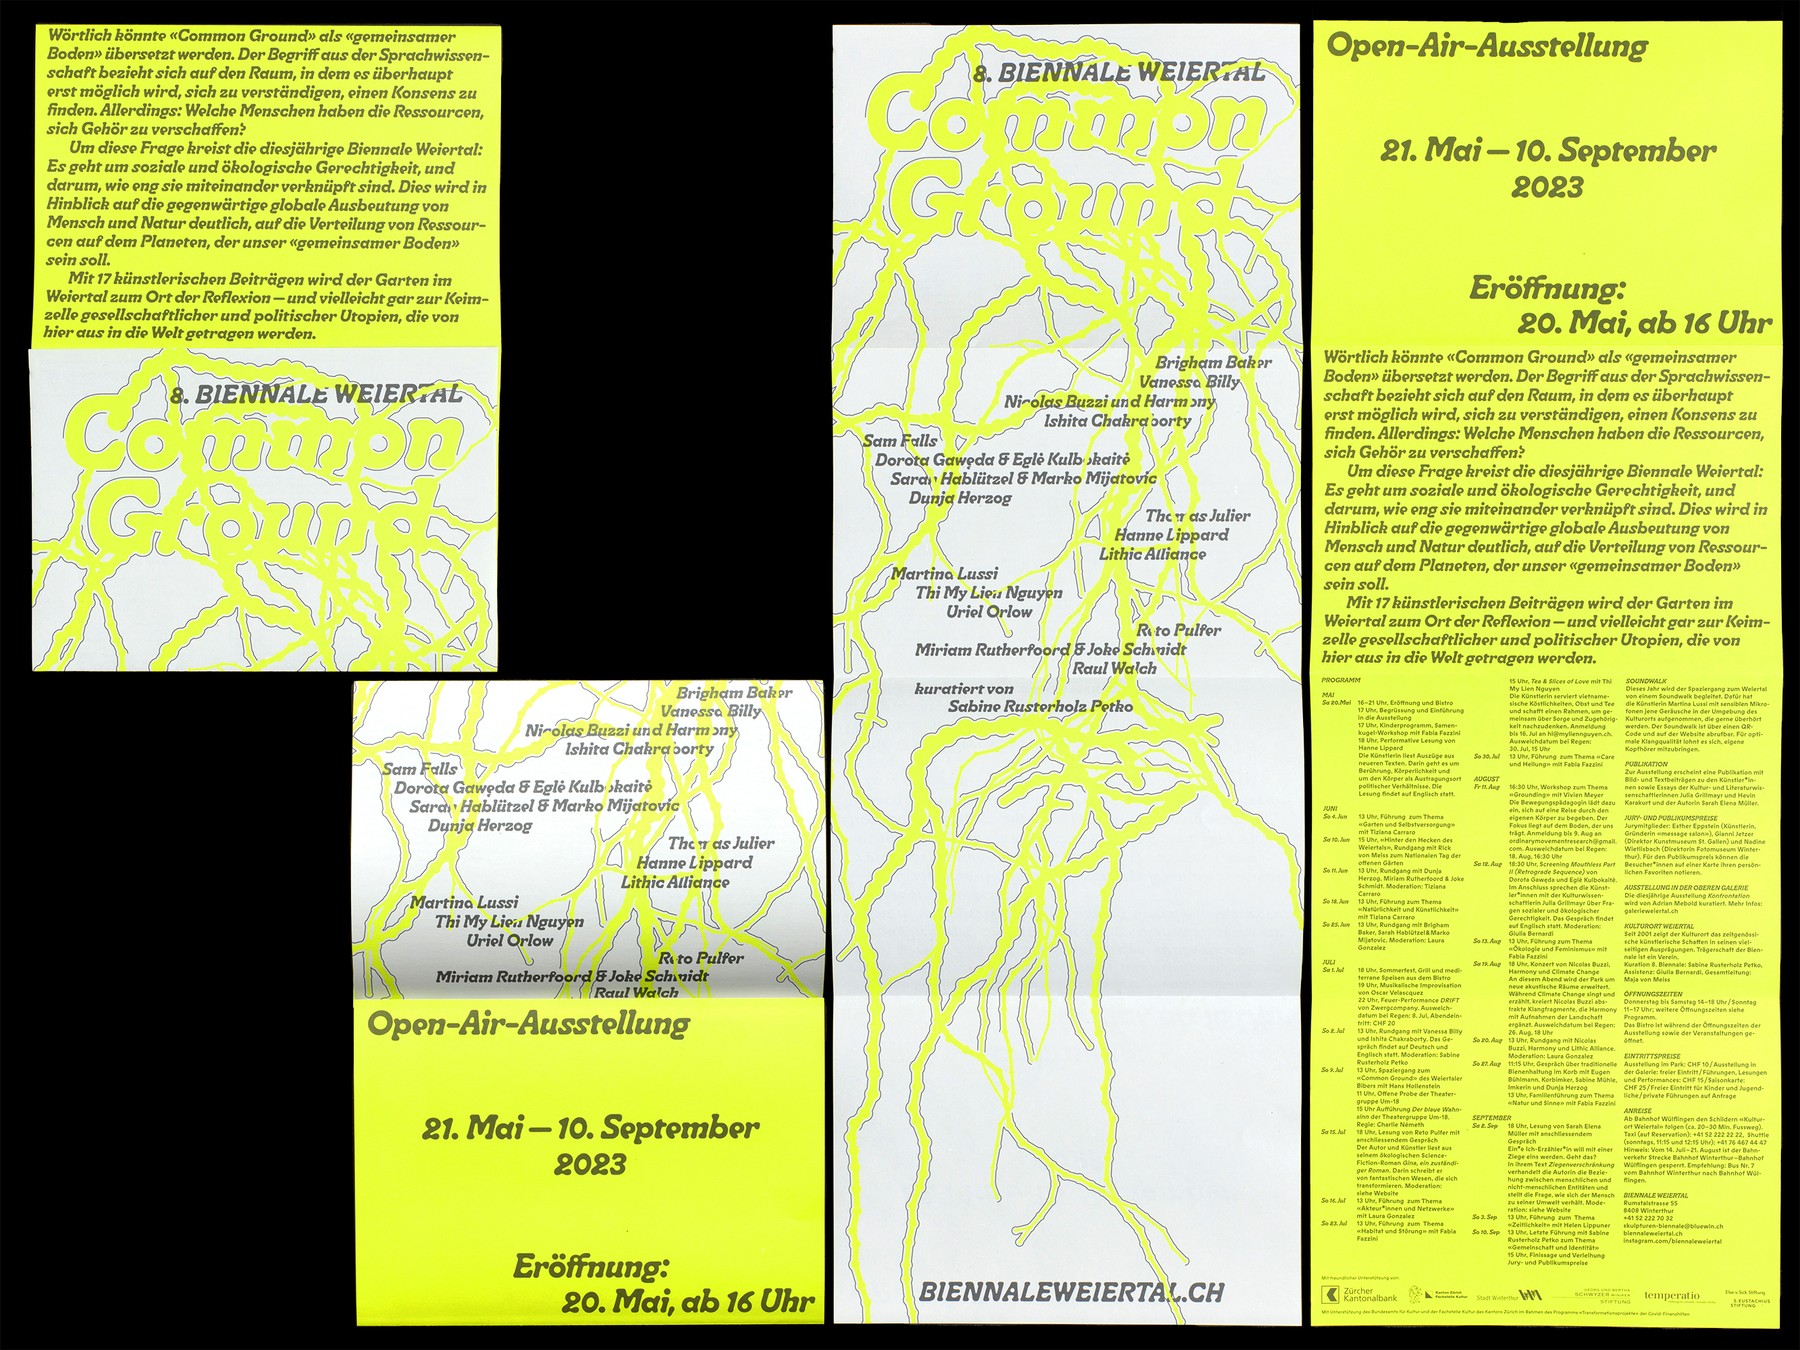 offshore_weiertal_biennale_flyer-compilation.jpg